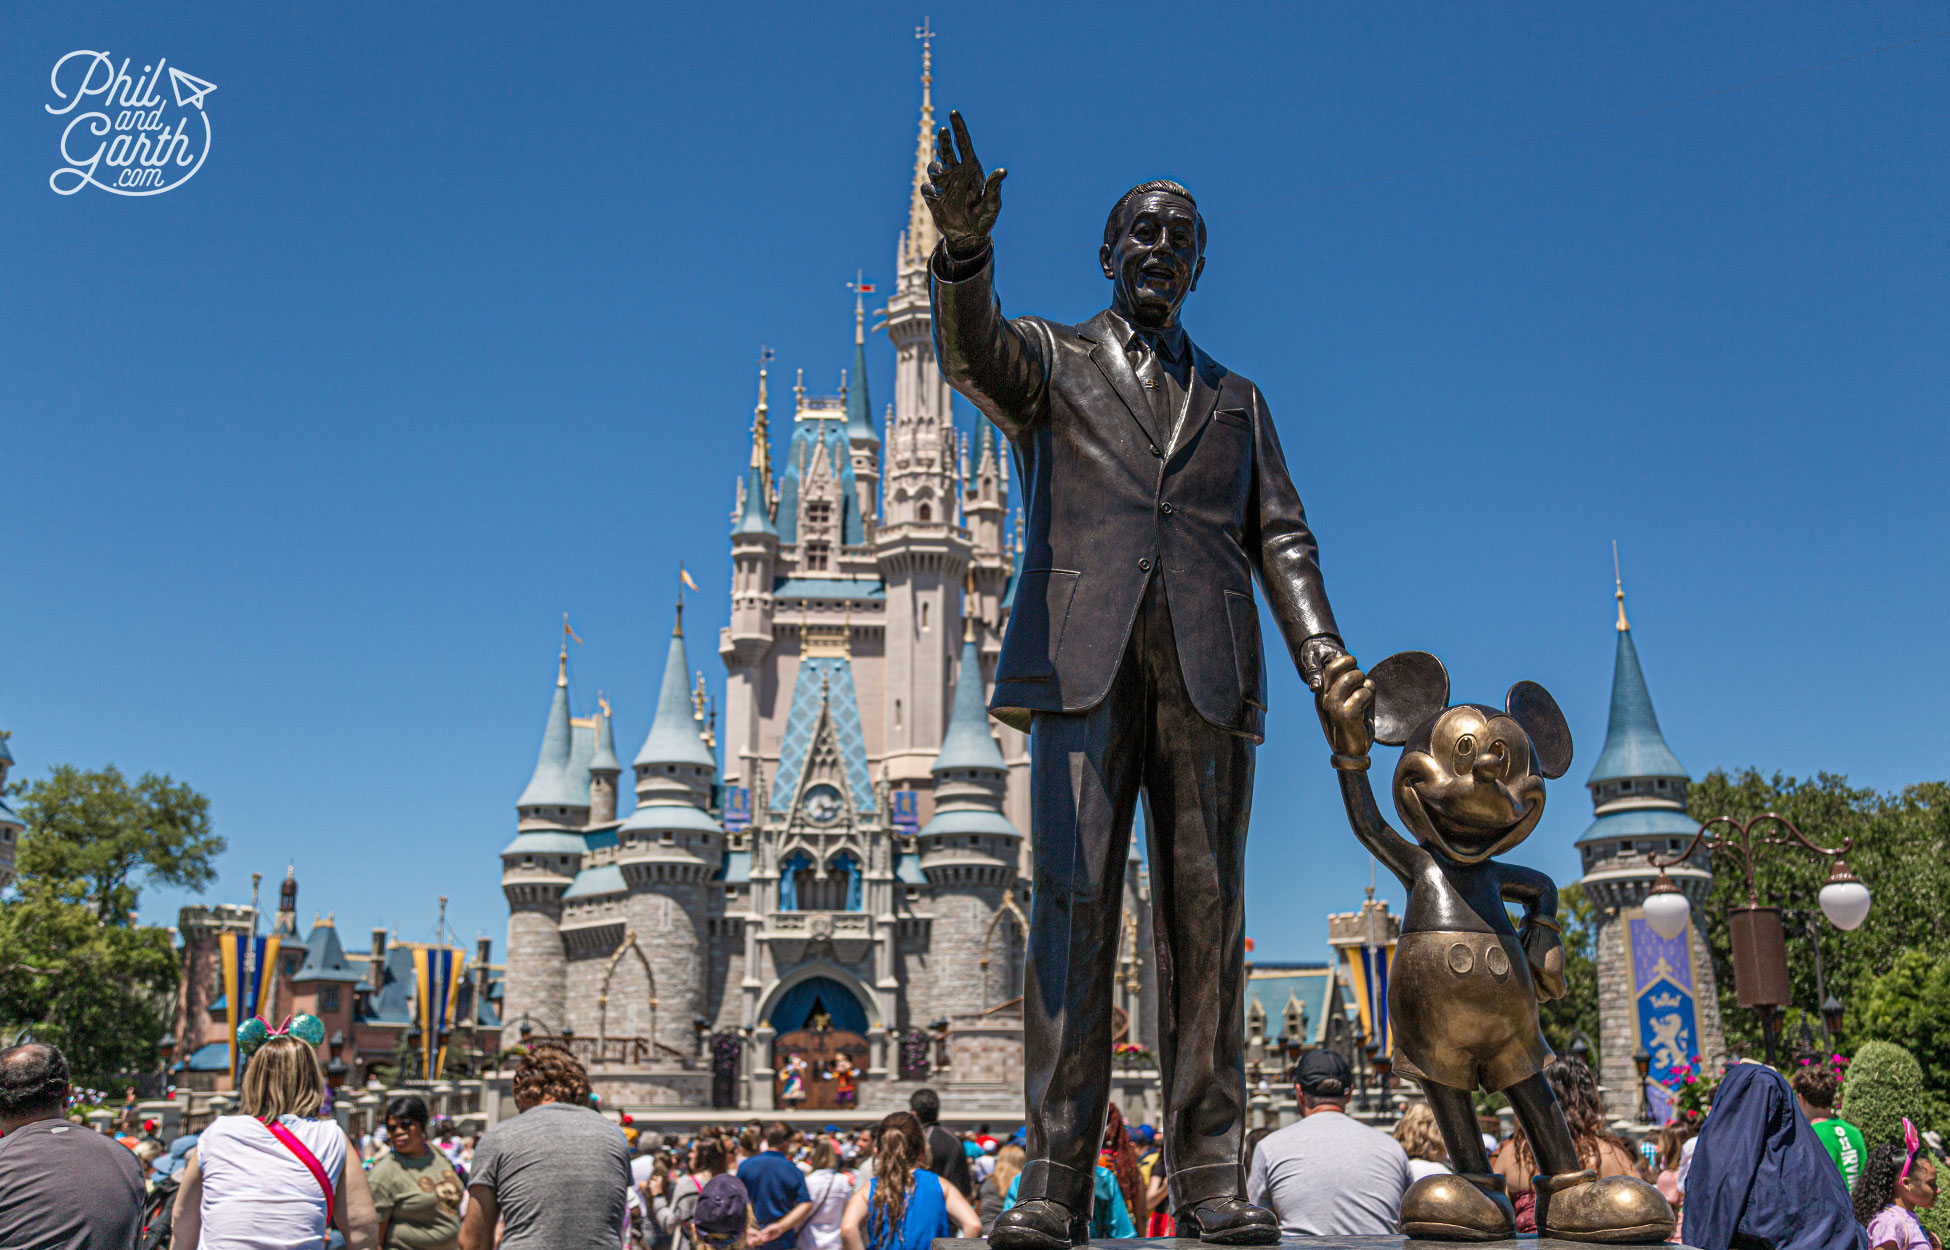 Magic Kingdom - The iconic theme park at Walt Disney World Orlando